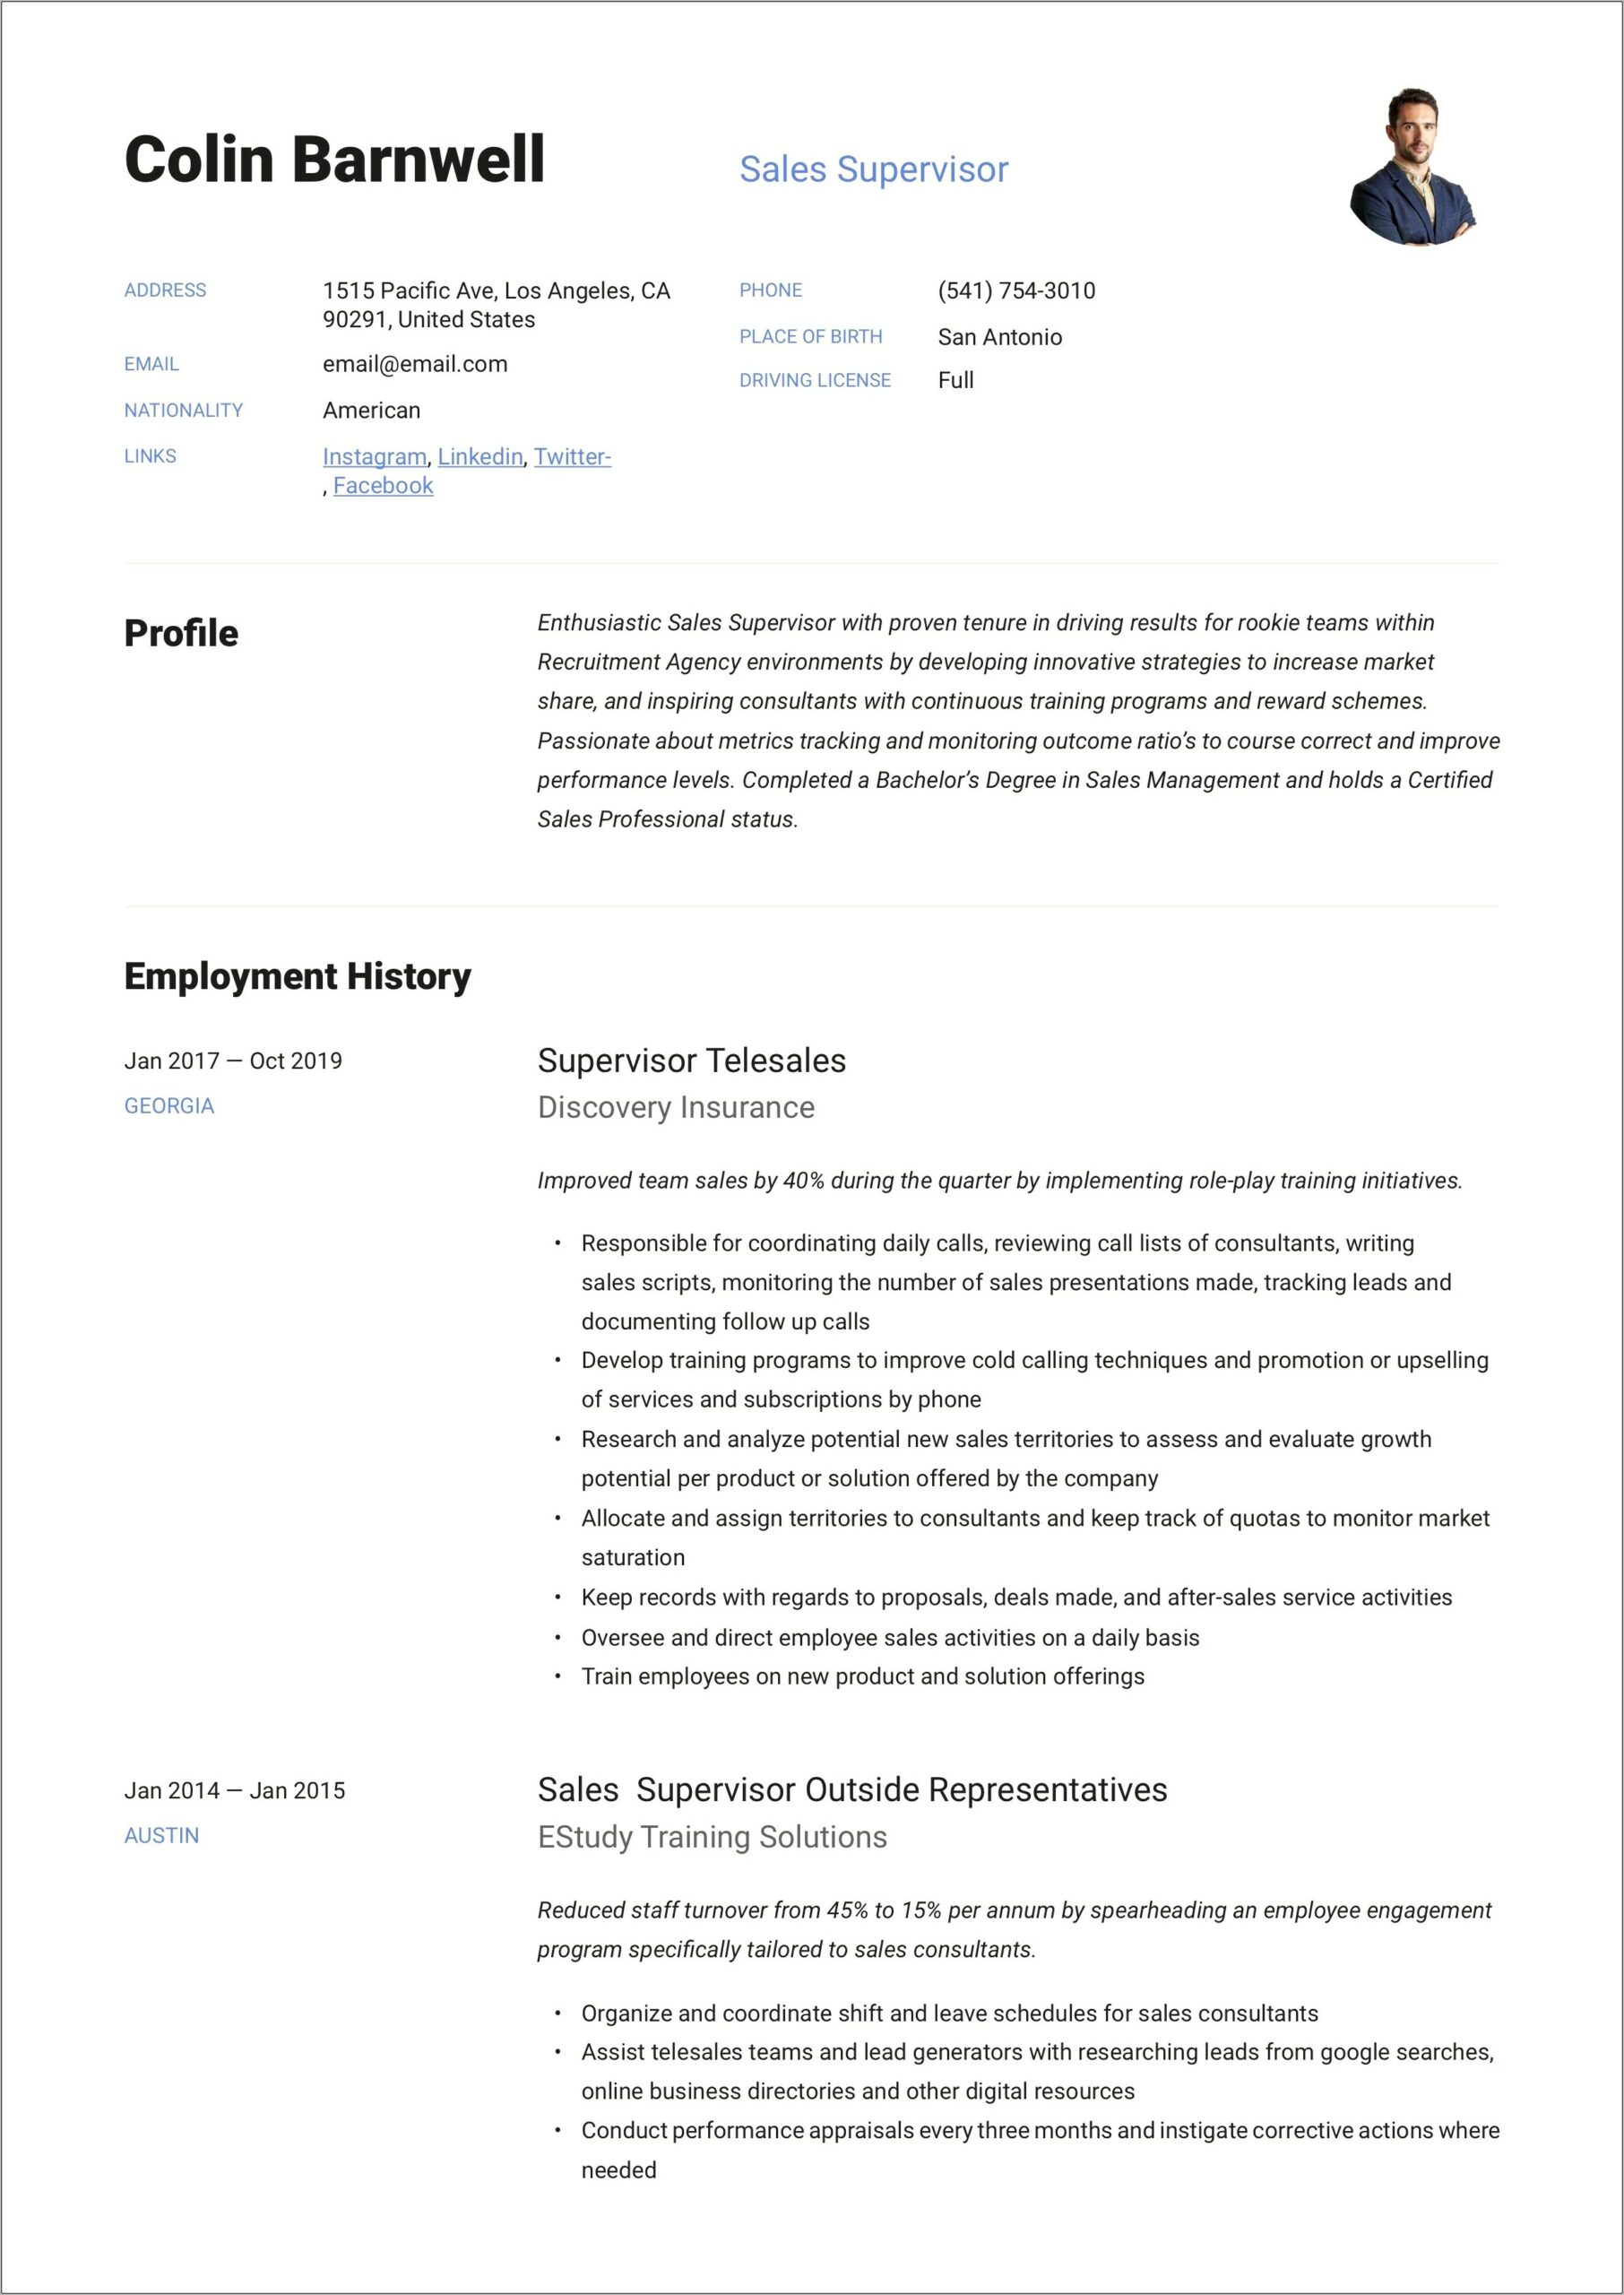 Resume Sample For Sales Supervisor